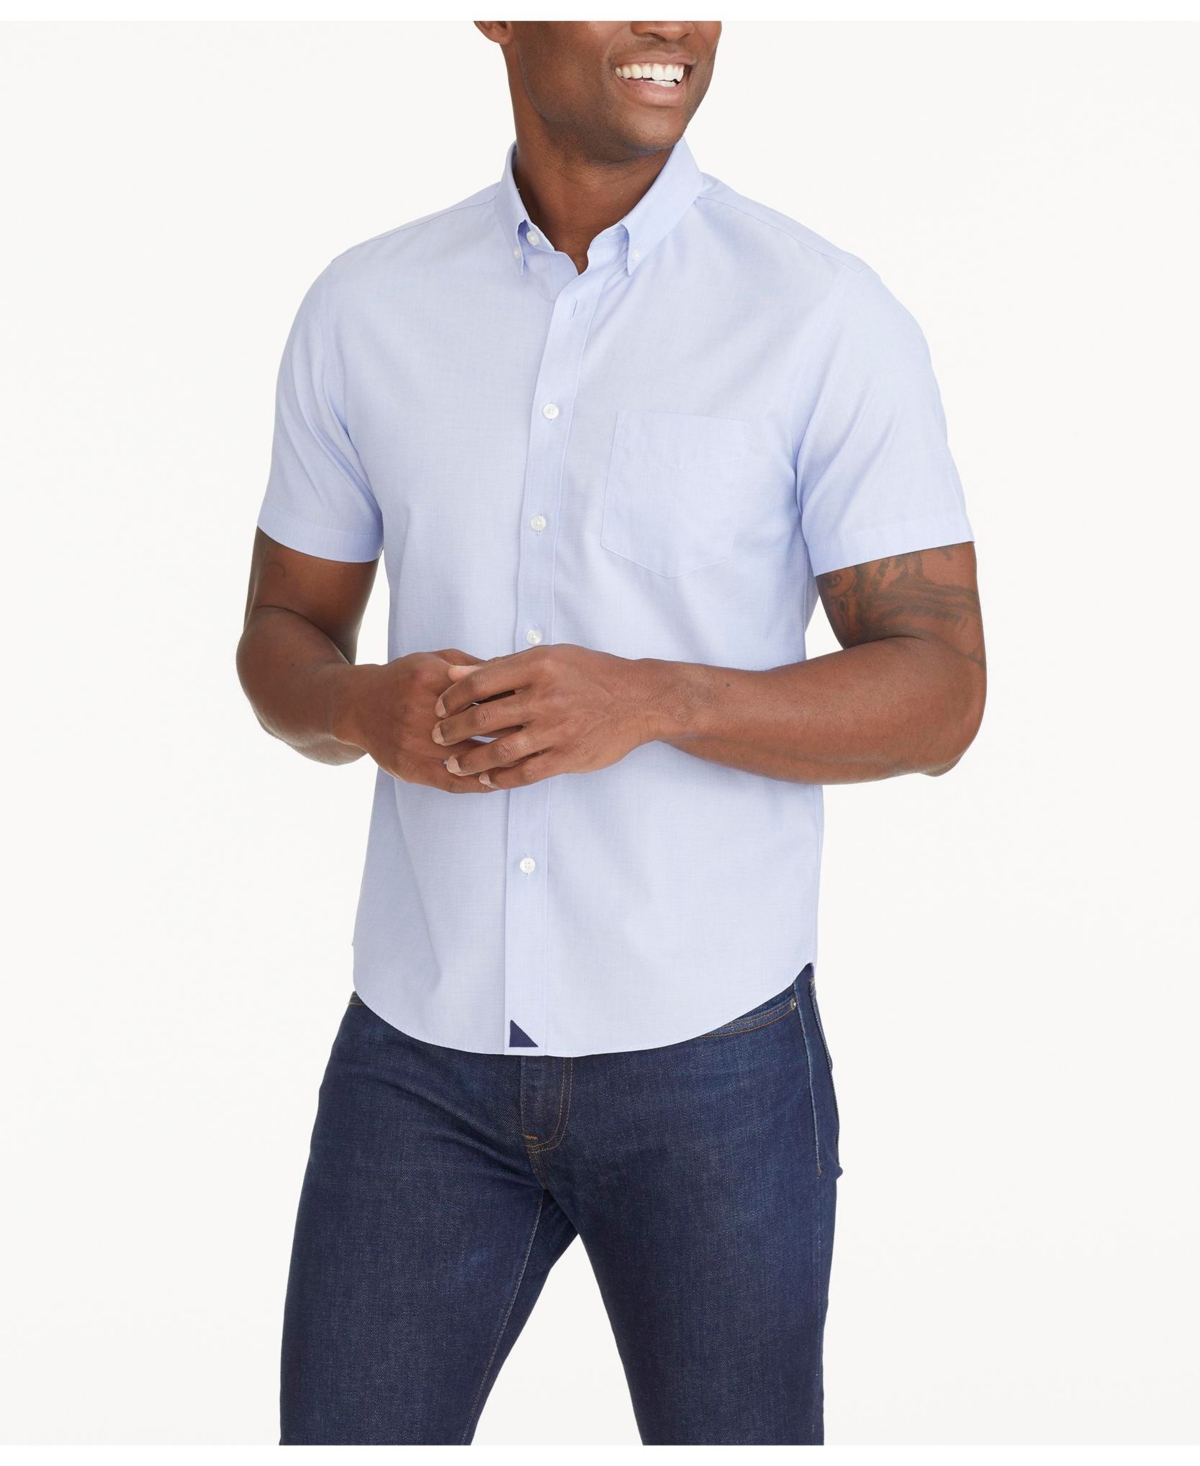 Untuck it Men's Slim Fit Wrinkle-Free Short-Sleeve Hillstowe Button Up Shirt - Blue